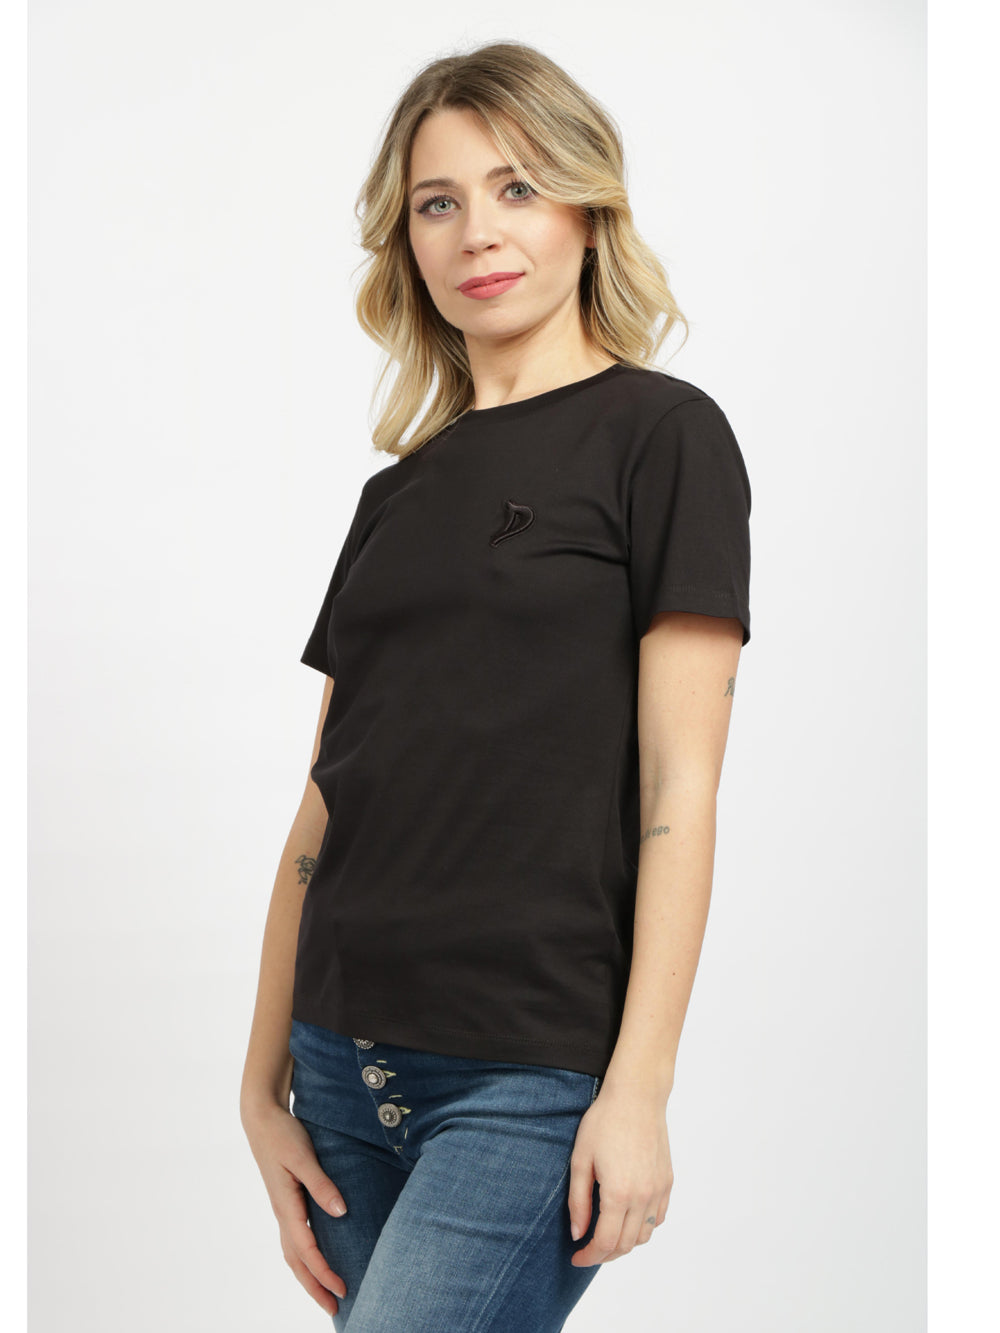 DONDUP T-Shirt Girocollo in Cotone Nera con Logo Nero Nero